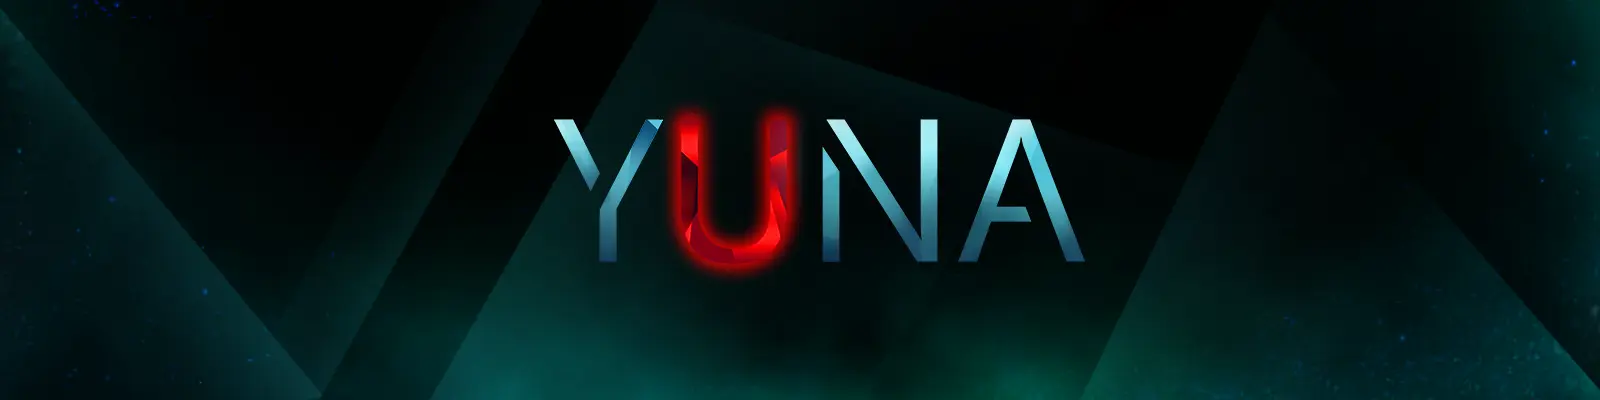 Yuna [v0.9.6 Alpha] main image